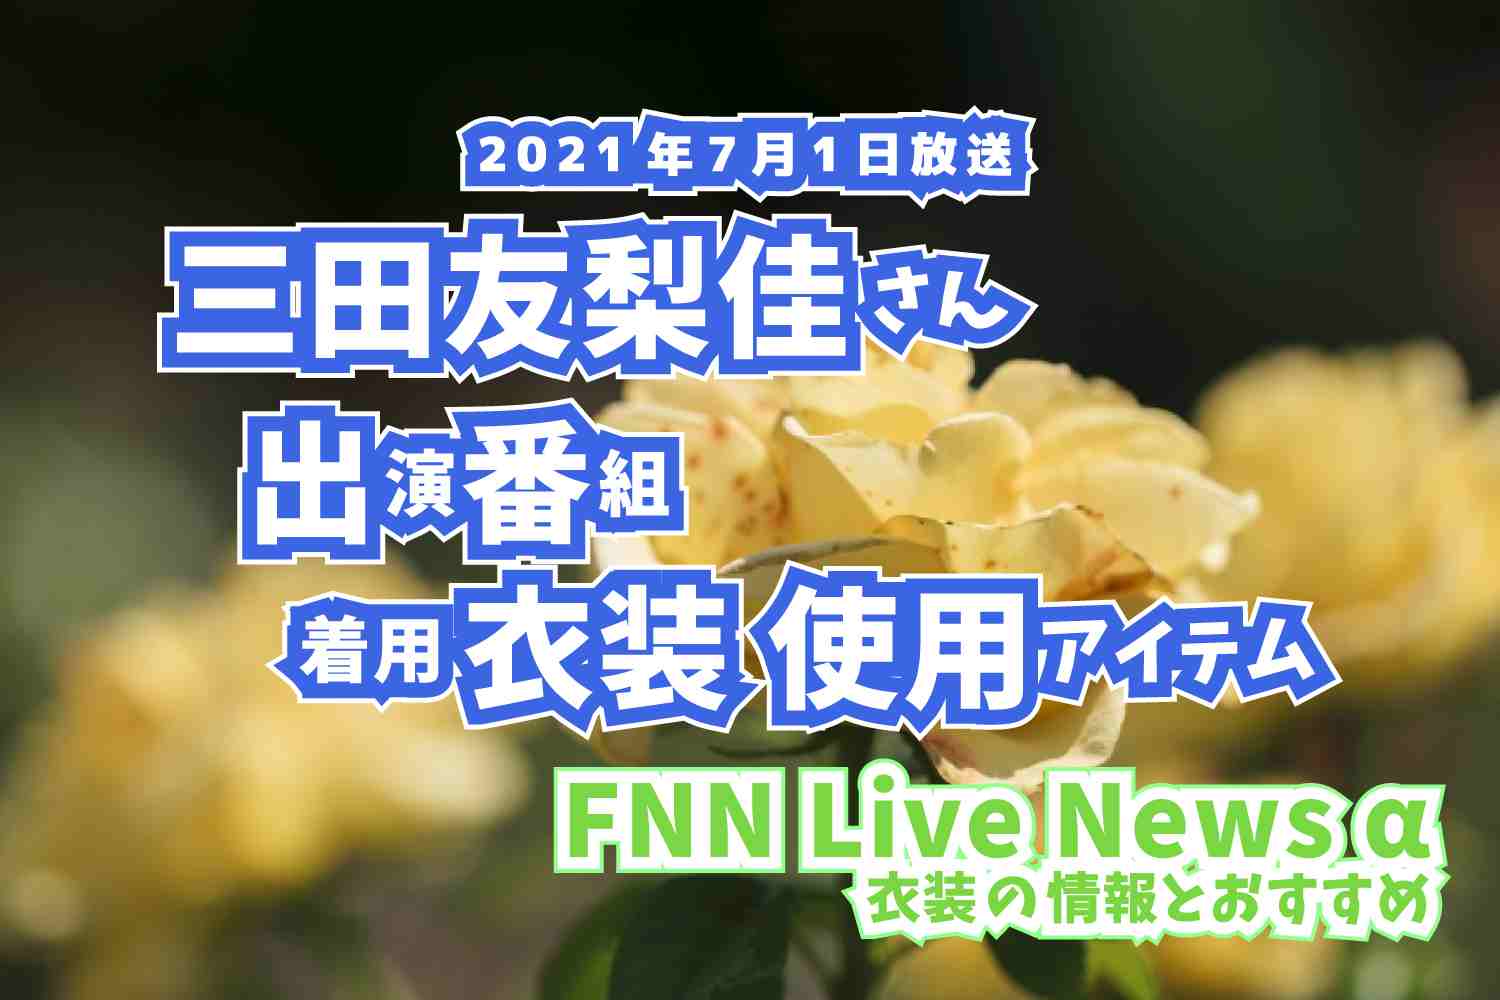 FNN Live News α　三田友梨佳さん　衣装　2021年7月1日放送